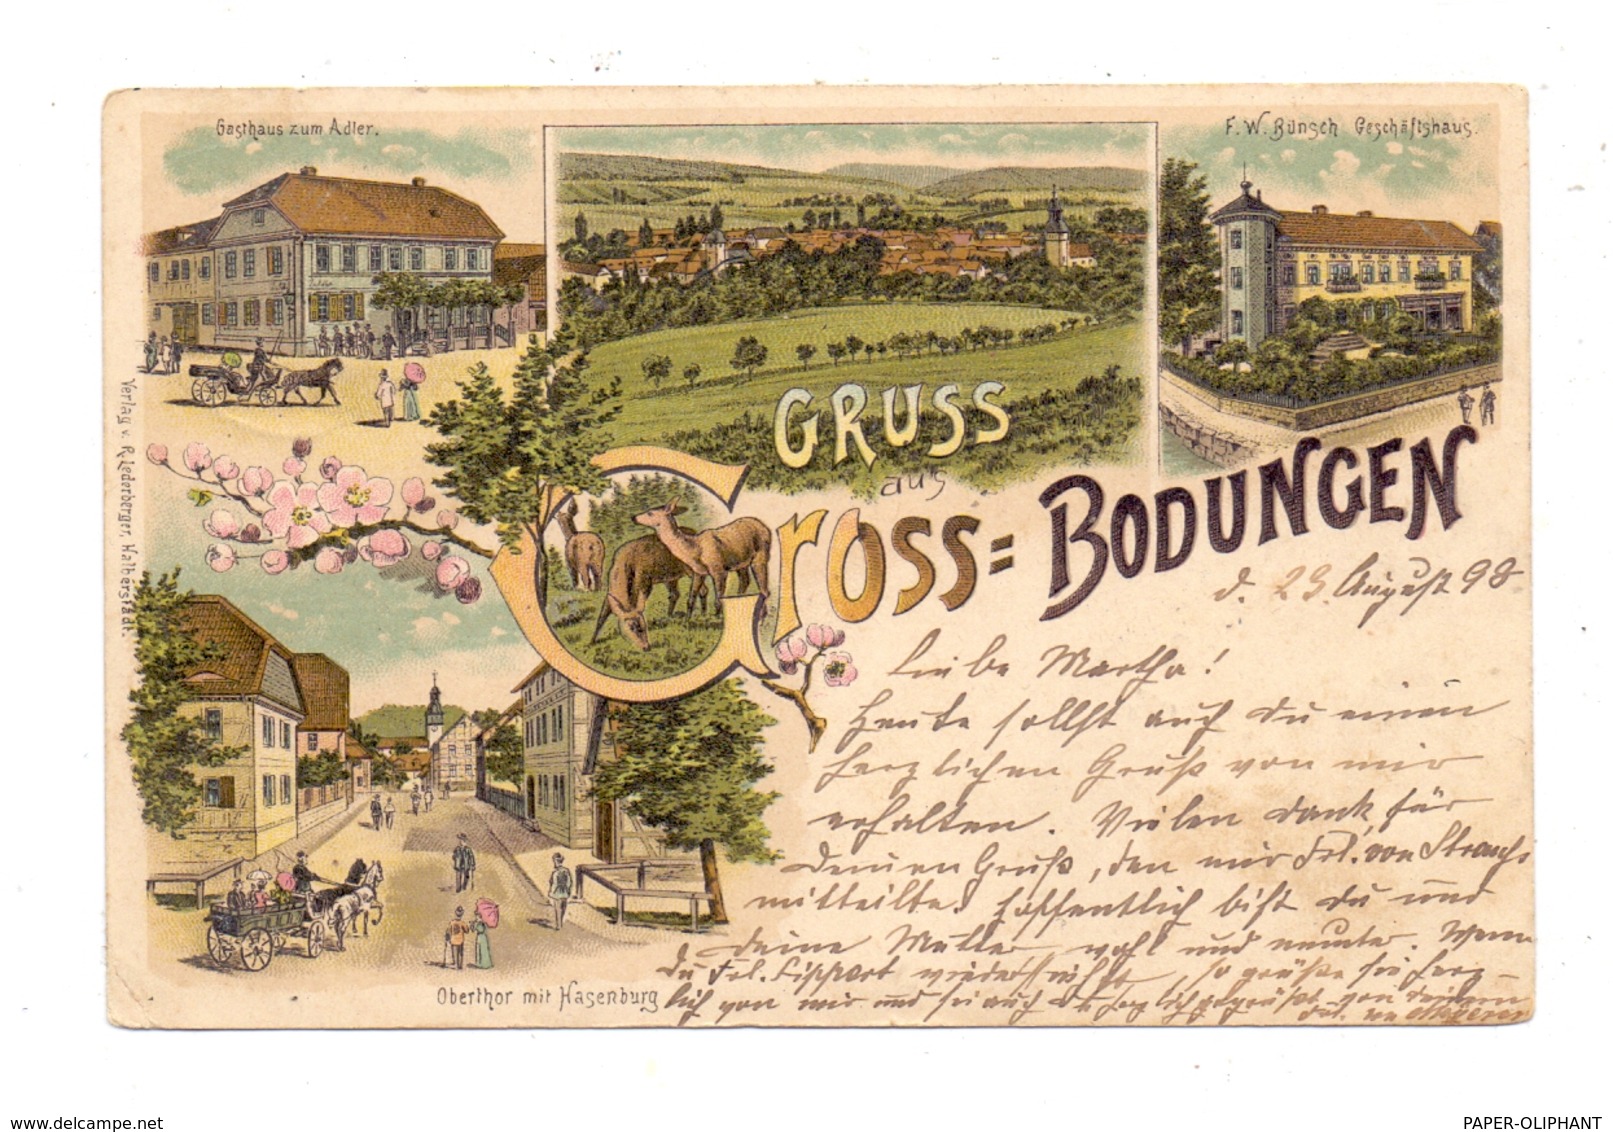 0-5601 AM OHMBERG - GROSSBODUNGEN / Eichsfeld, Lithographie 1898, Gasthaus Zum Adler, Geschäftshaus Bünsch, Oberthor - Heiligenstadt